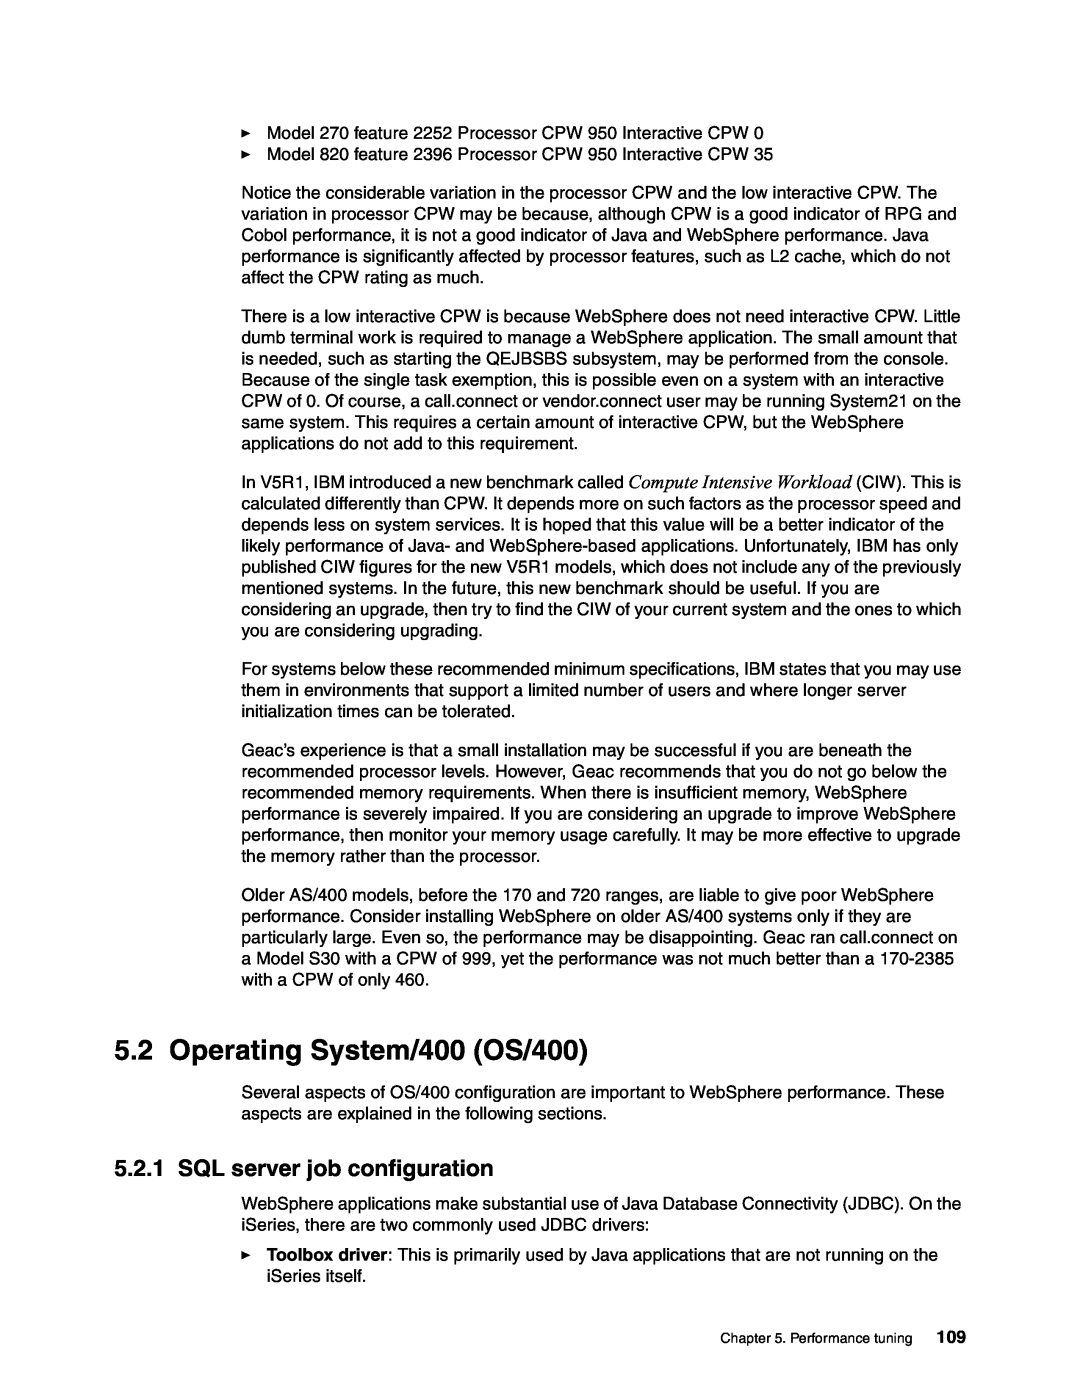 IBM SG24-6526-00 manual Operating System/400 OS/400, SQL server job configuration 